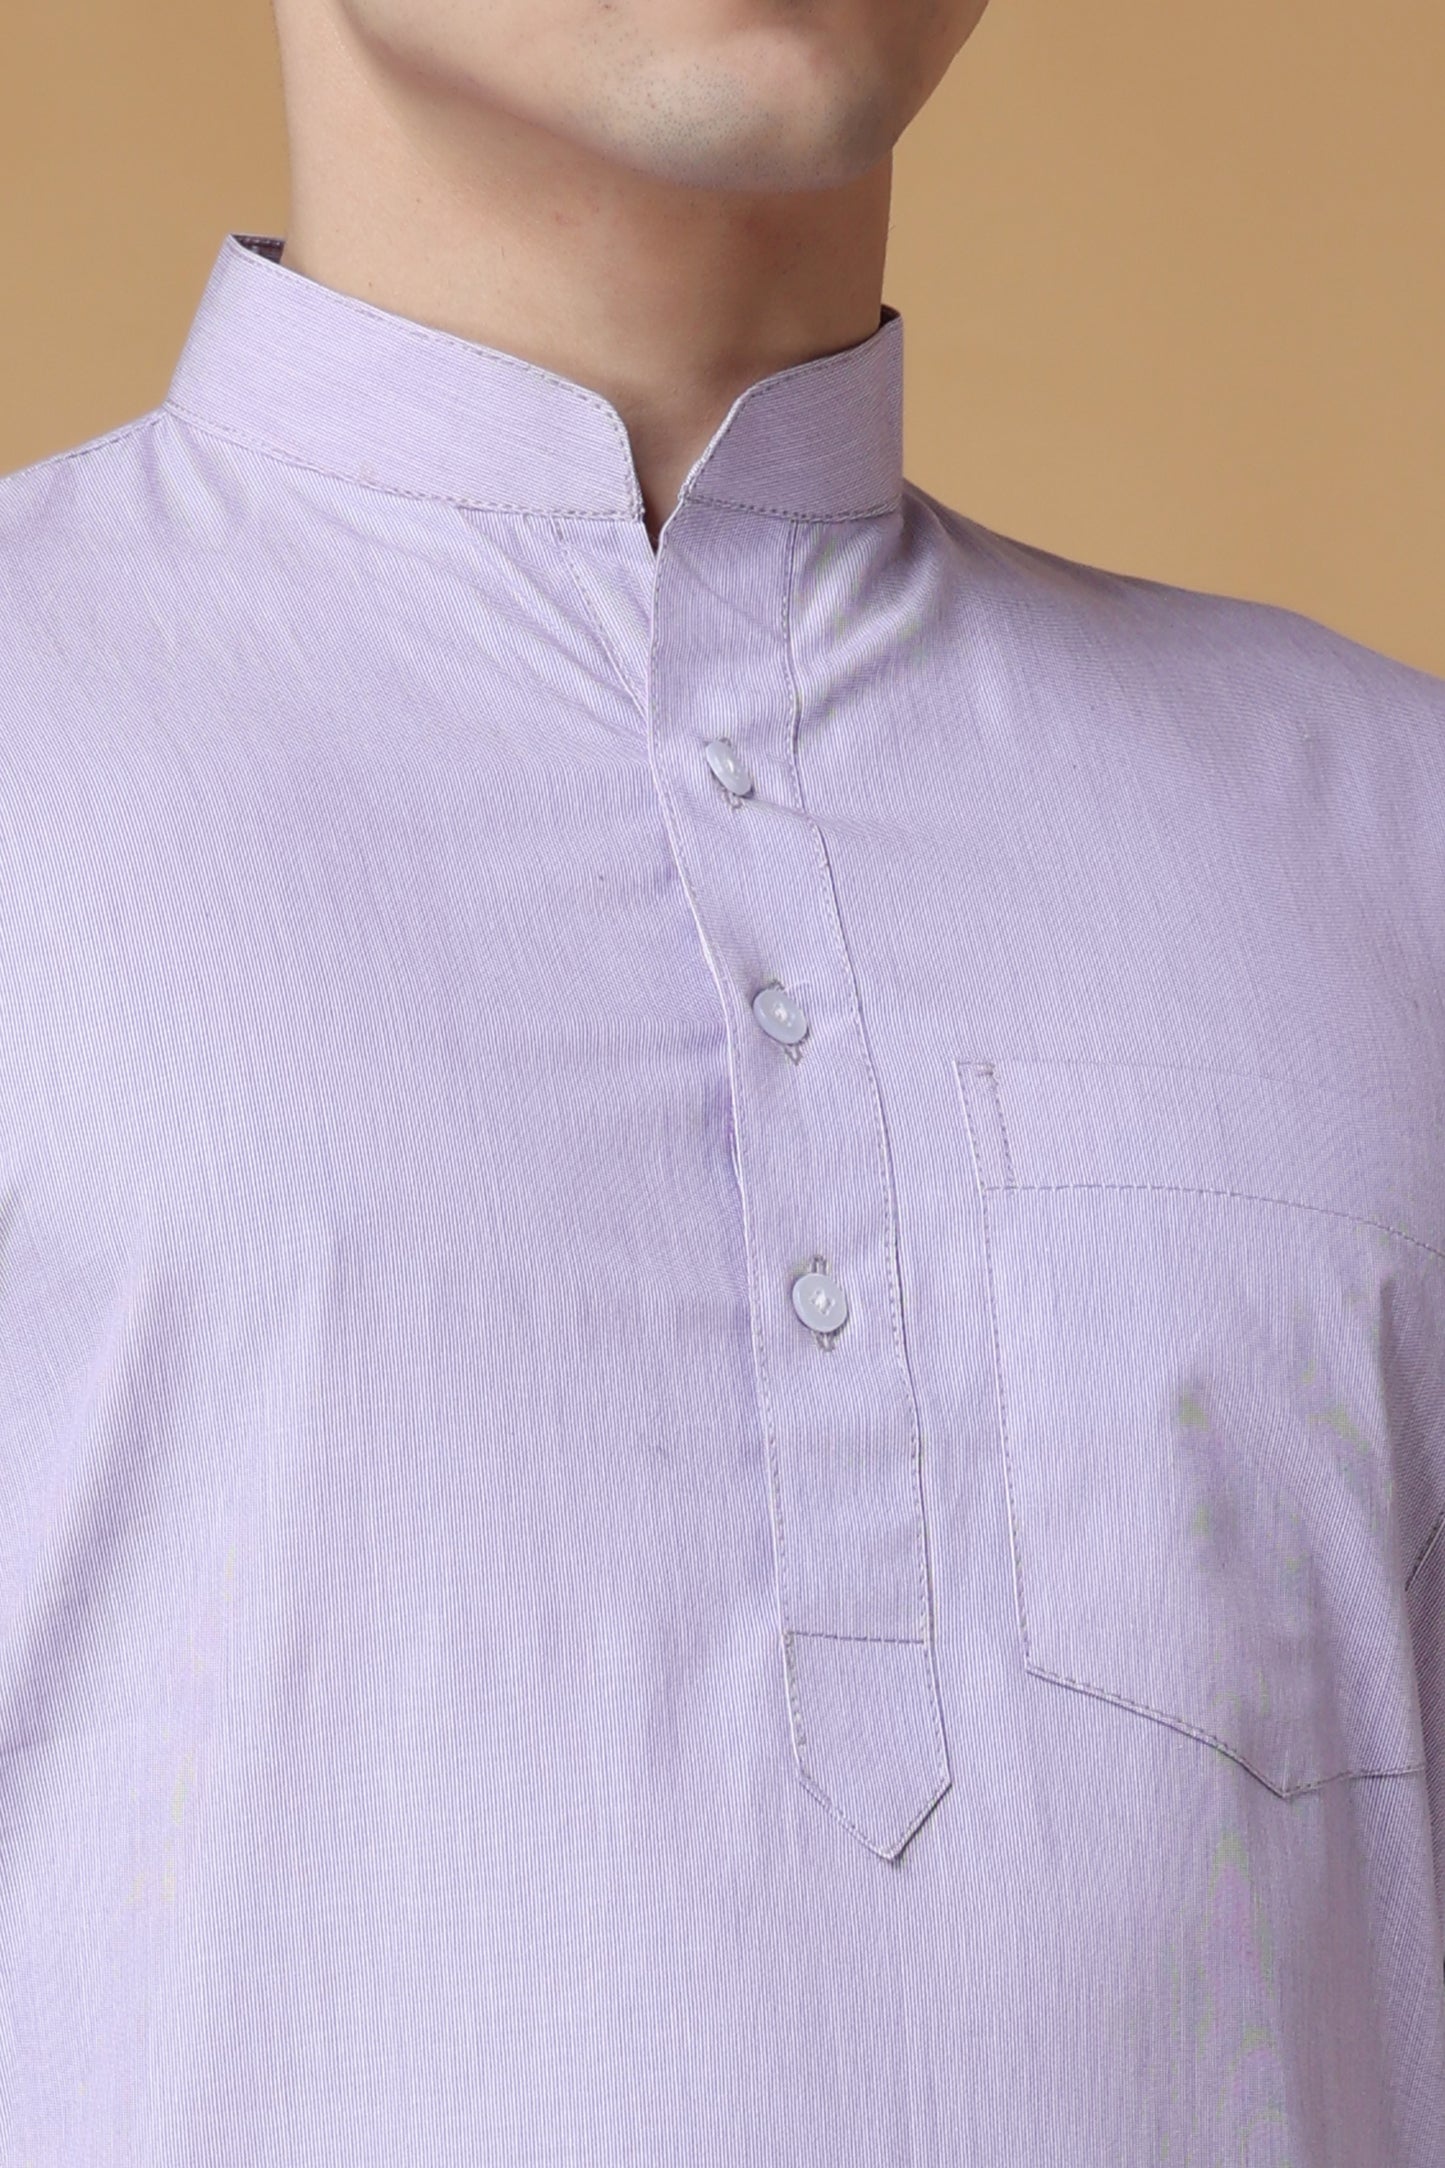 Men's Plus Size Lilac Lustre Cotton Kurta Pajama